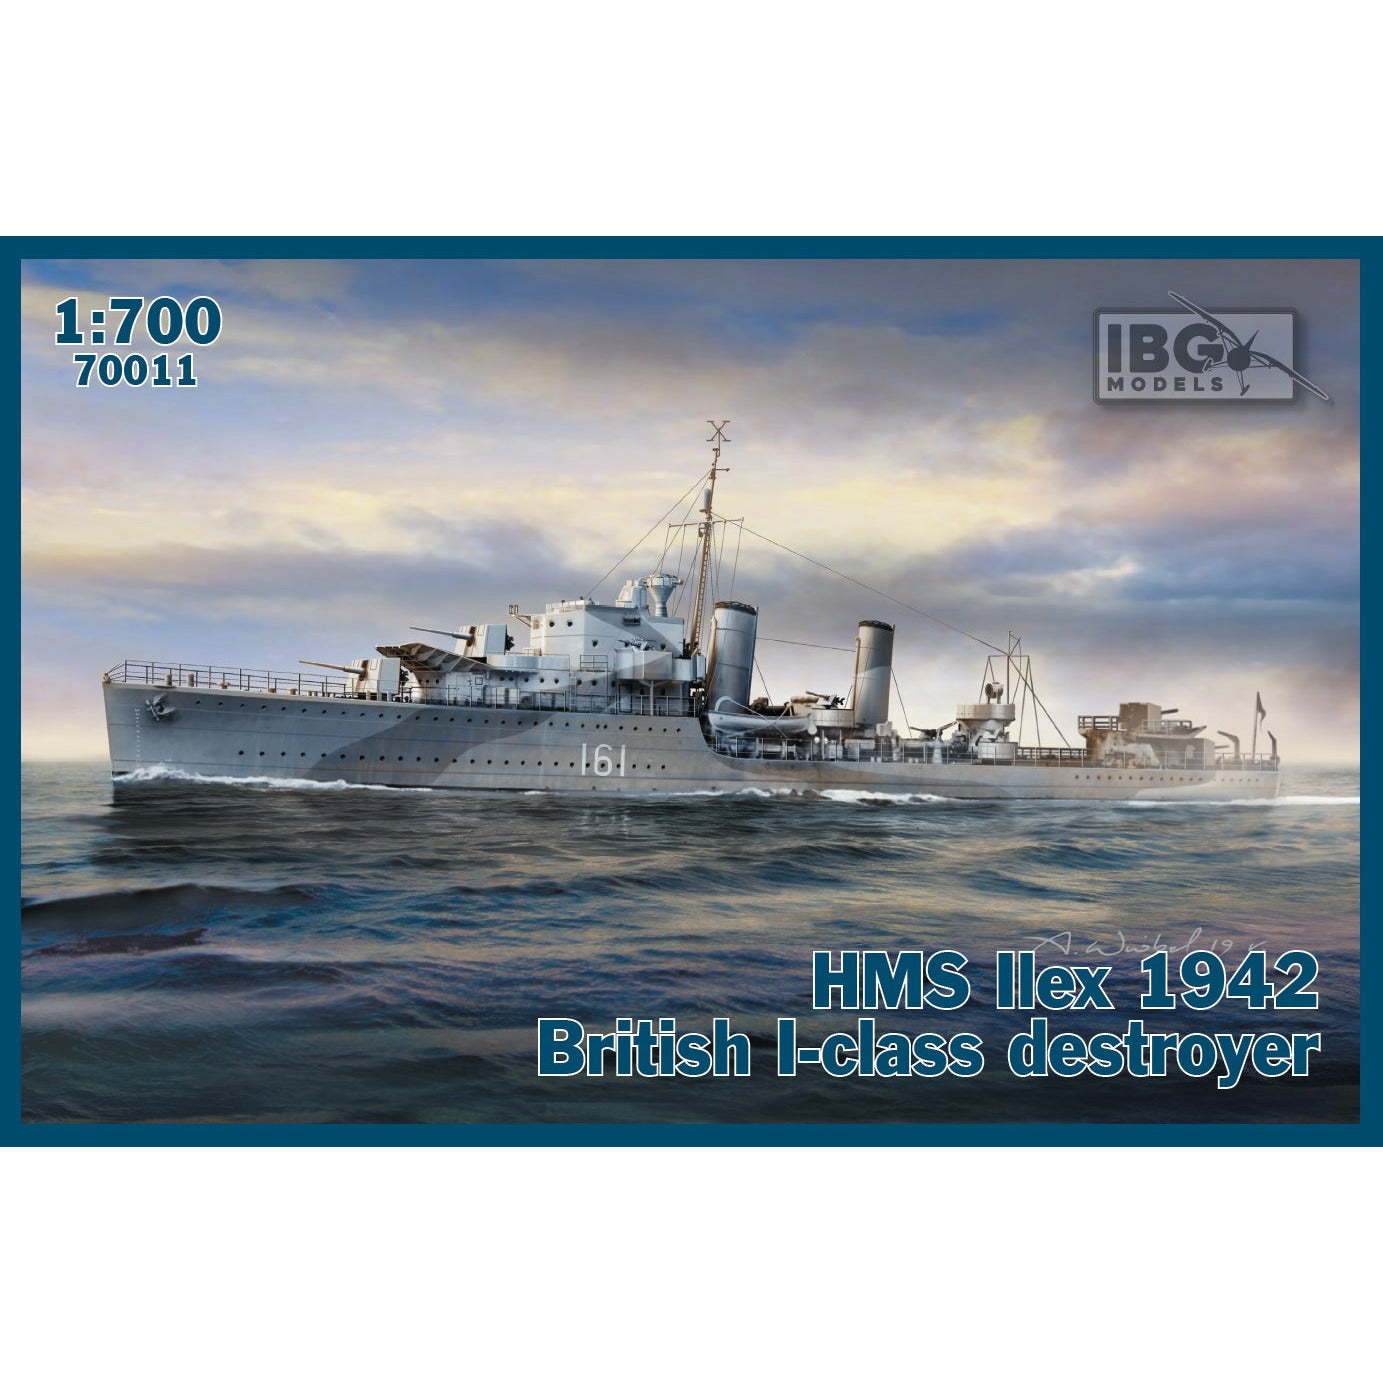 HMS Ilex 1942 British I-Class Destroyer 1/700 Model Ship Kit #70011 by IBG Models